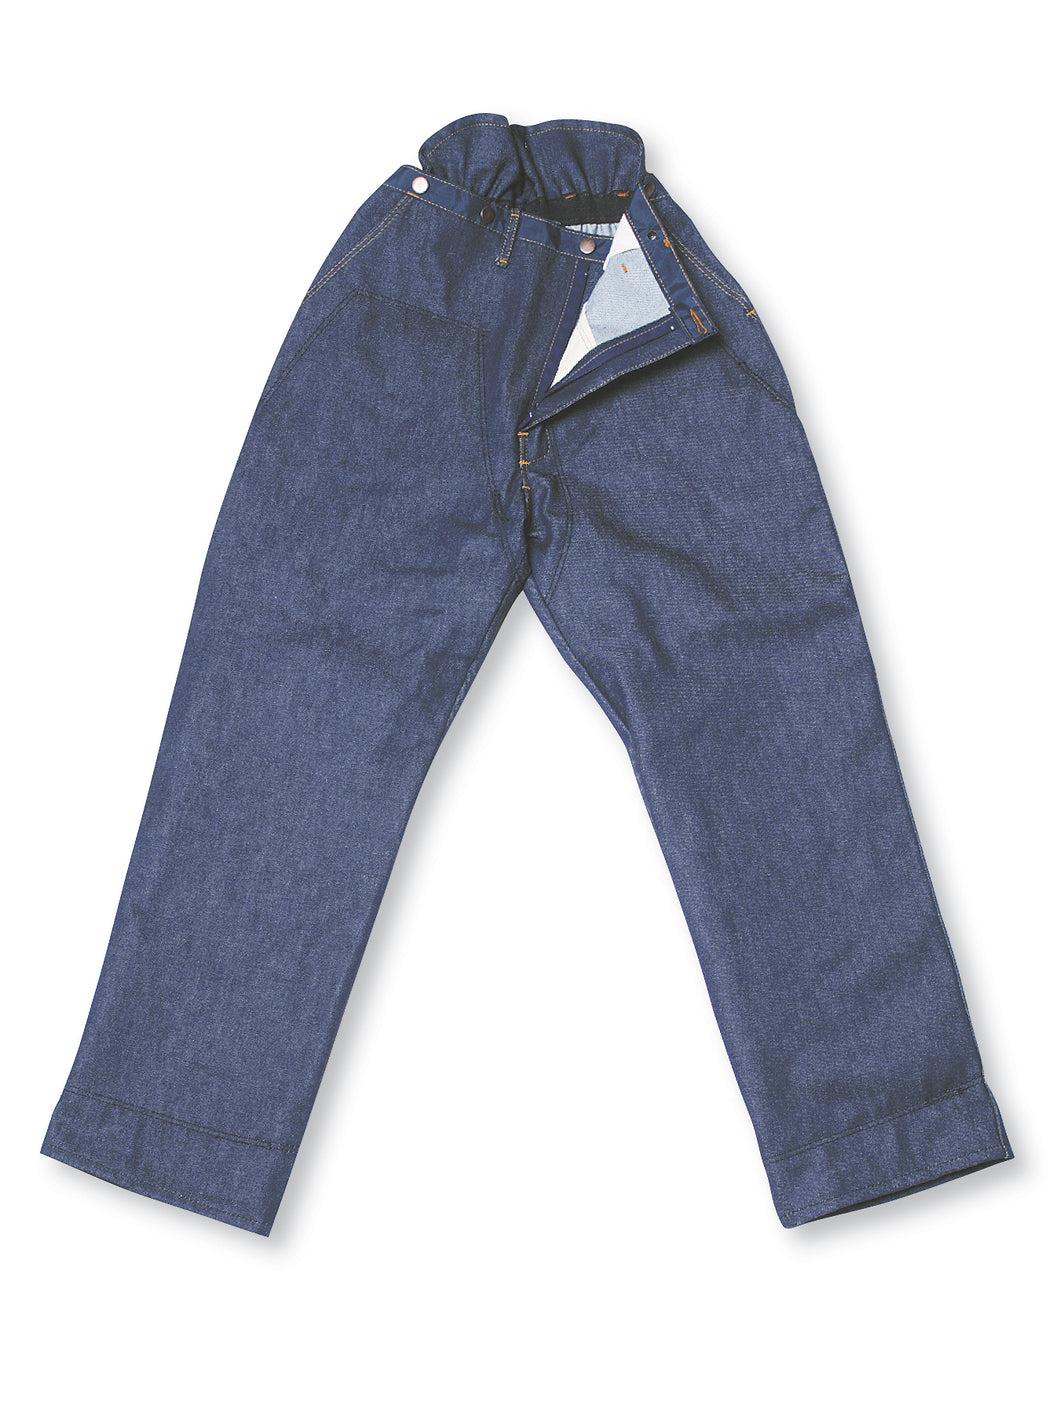 14 oz Denim 4100 Fallers' Pants- Style #9014